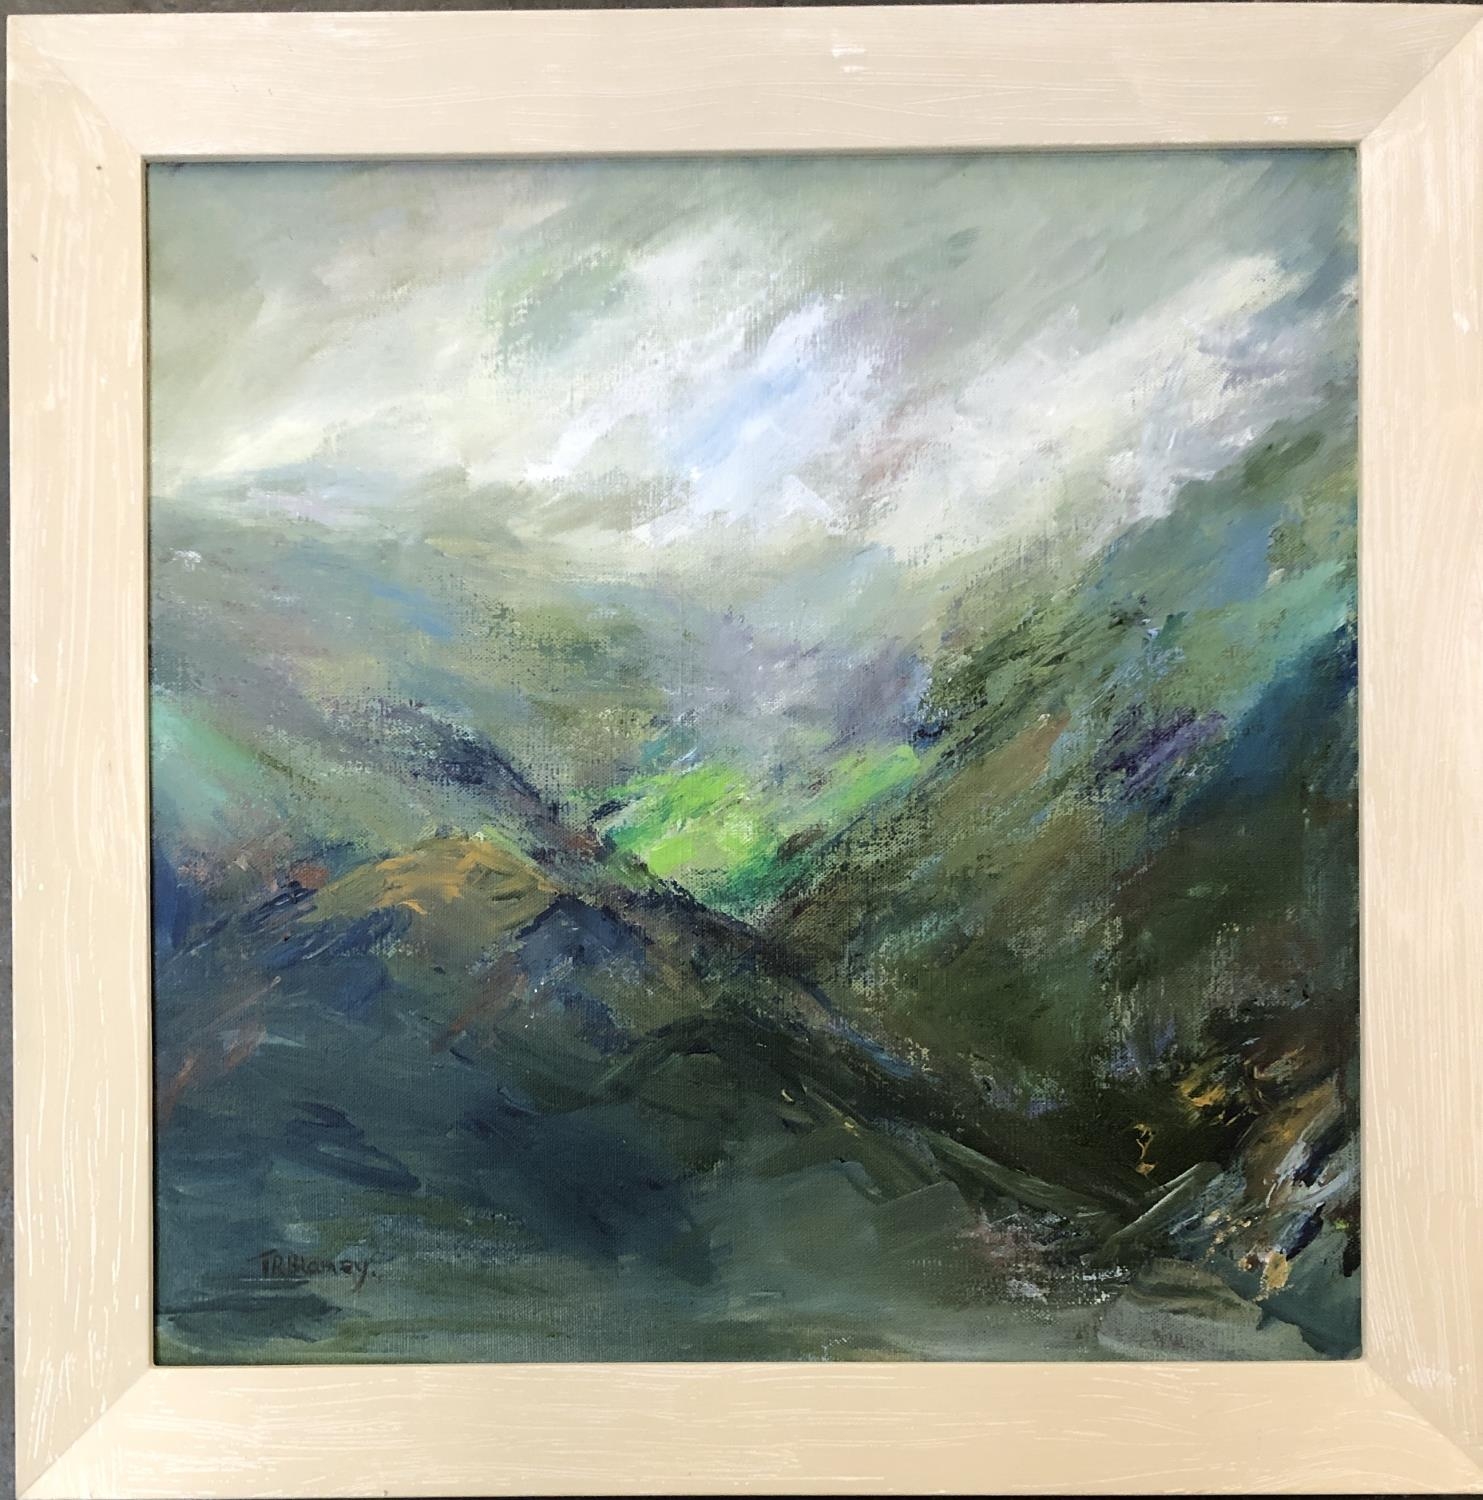 Thelma Blamey, acrylic on canvas, 'Mountain Mist', signed lower left, 39x39cm